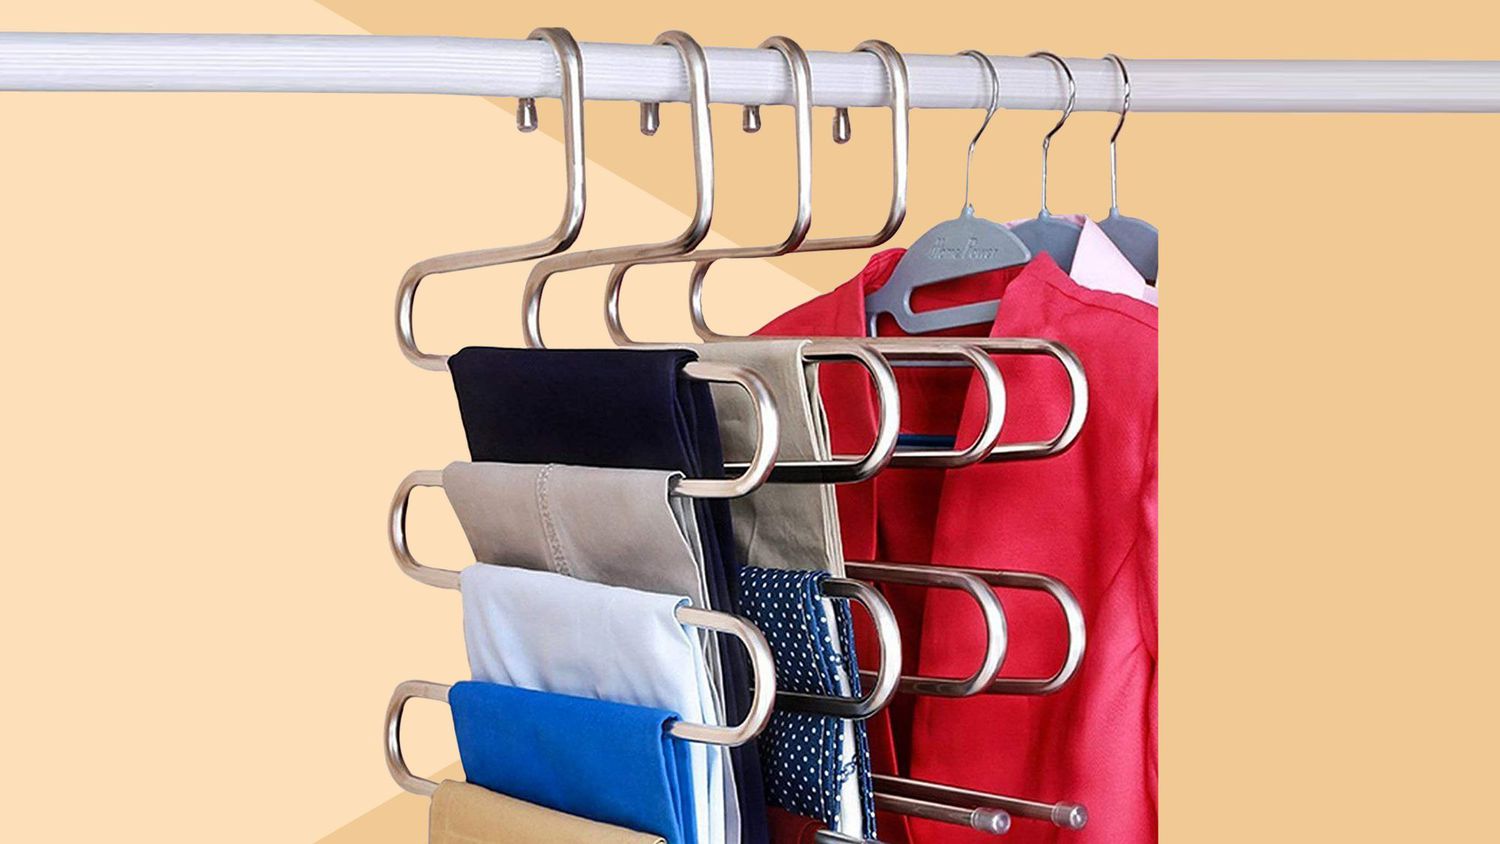 DOIOWN 6 Tier Skirt Hangers Pants Hangers Closet Organizer Stainless Steel Fold up Space Saving Hangers 2-Pieces